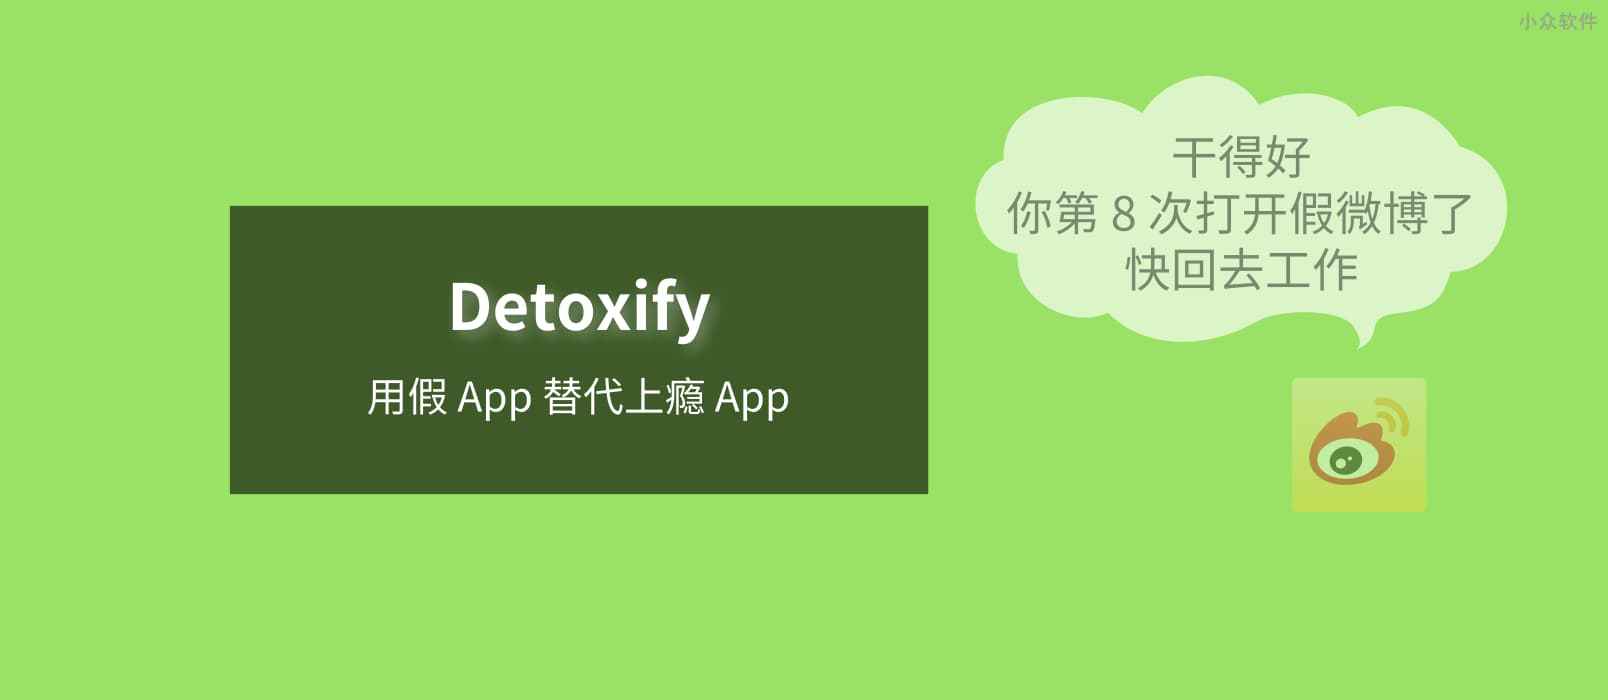 Detoxify - 用一个假 App 替代一个上瘾的 App 1